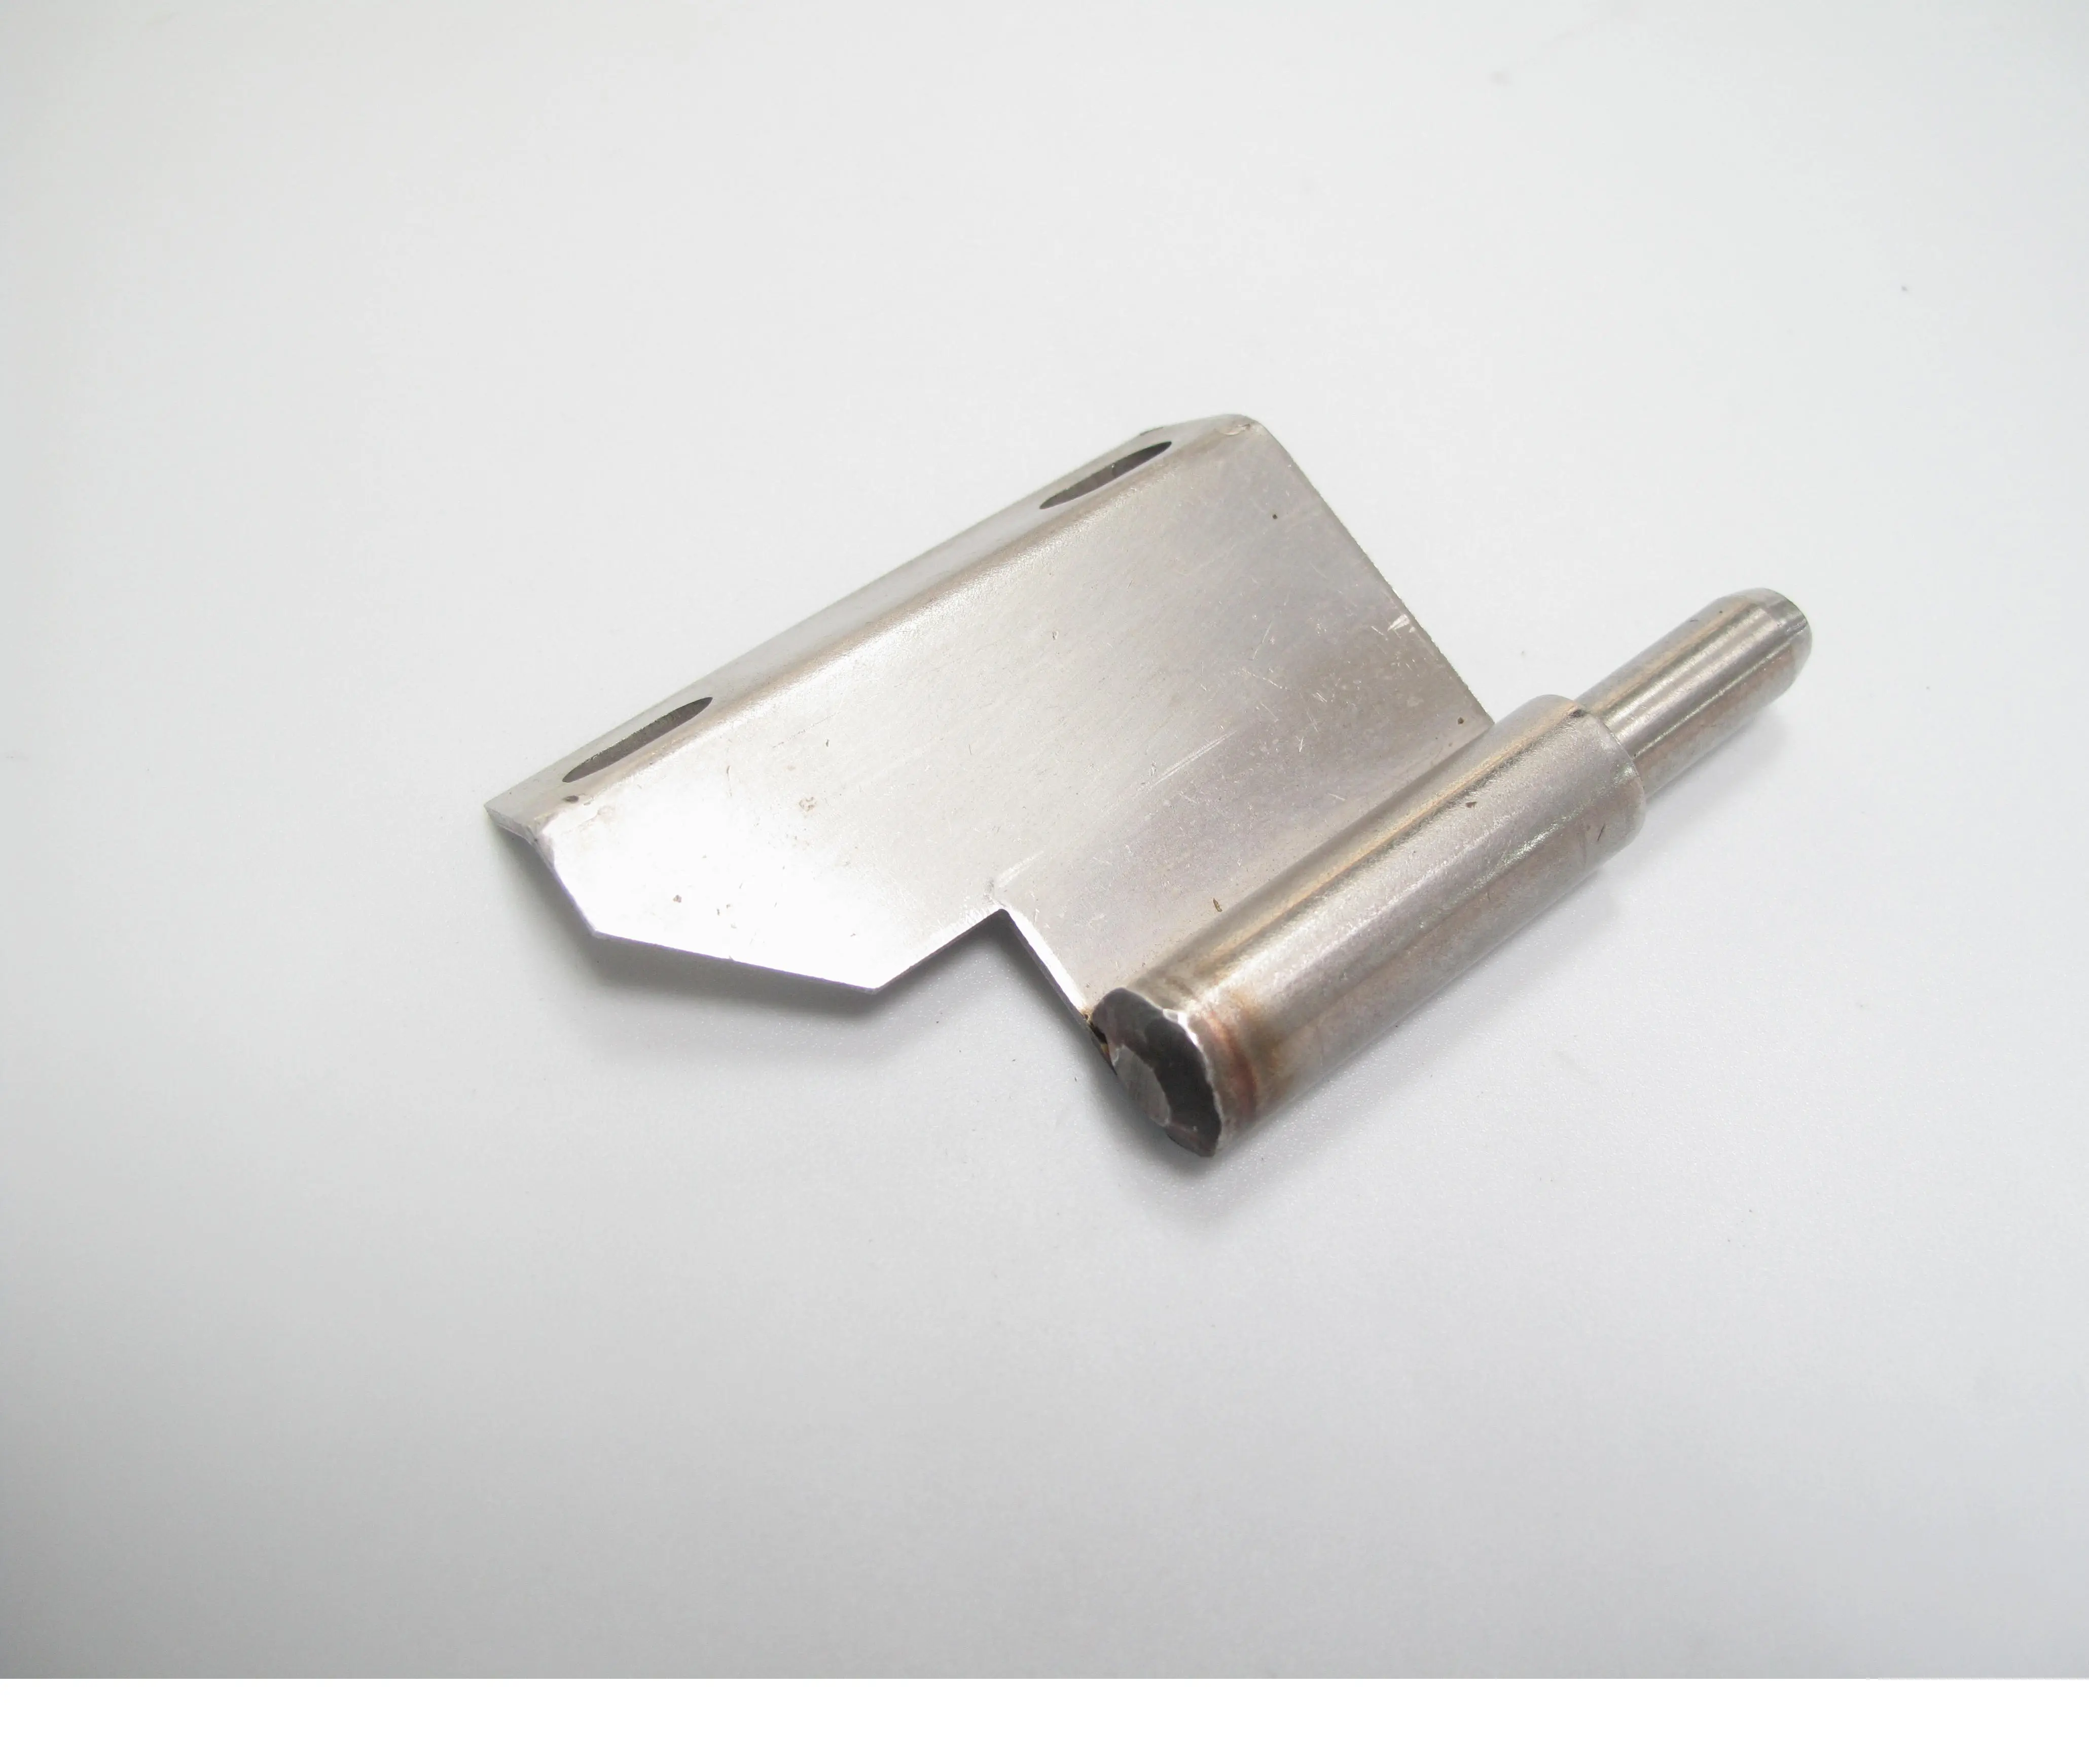 Stainless steel sheet metal stamping part of door hinge hardware